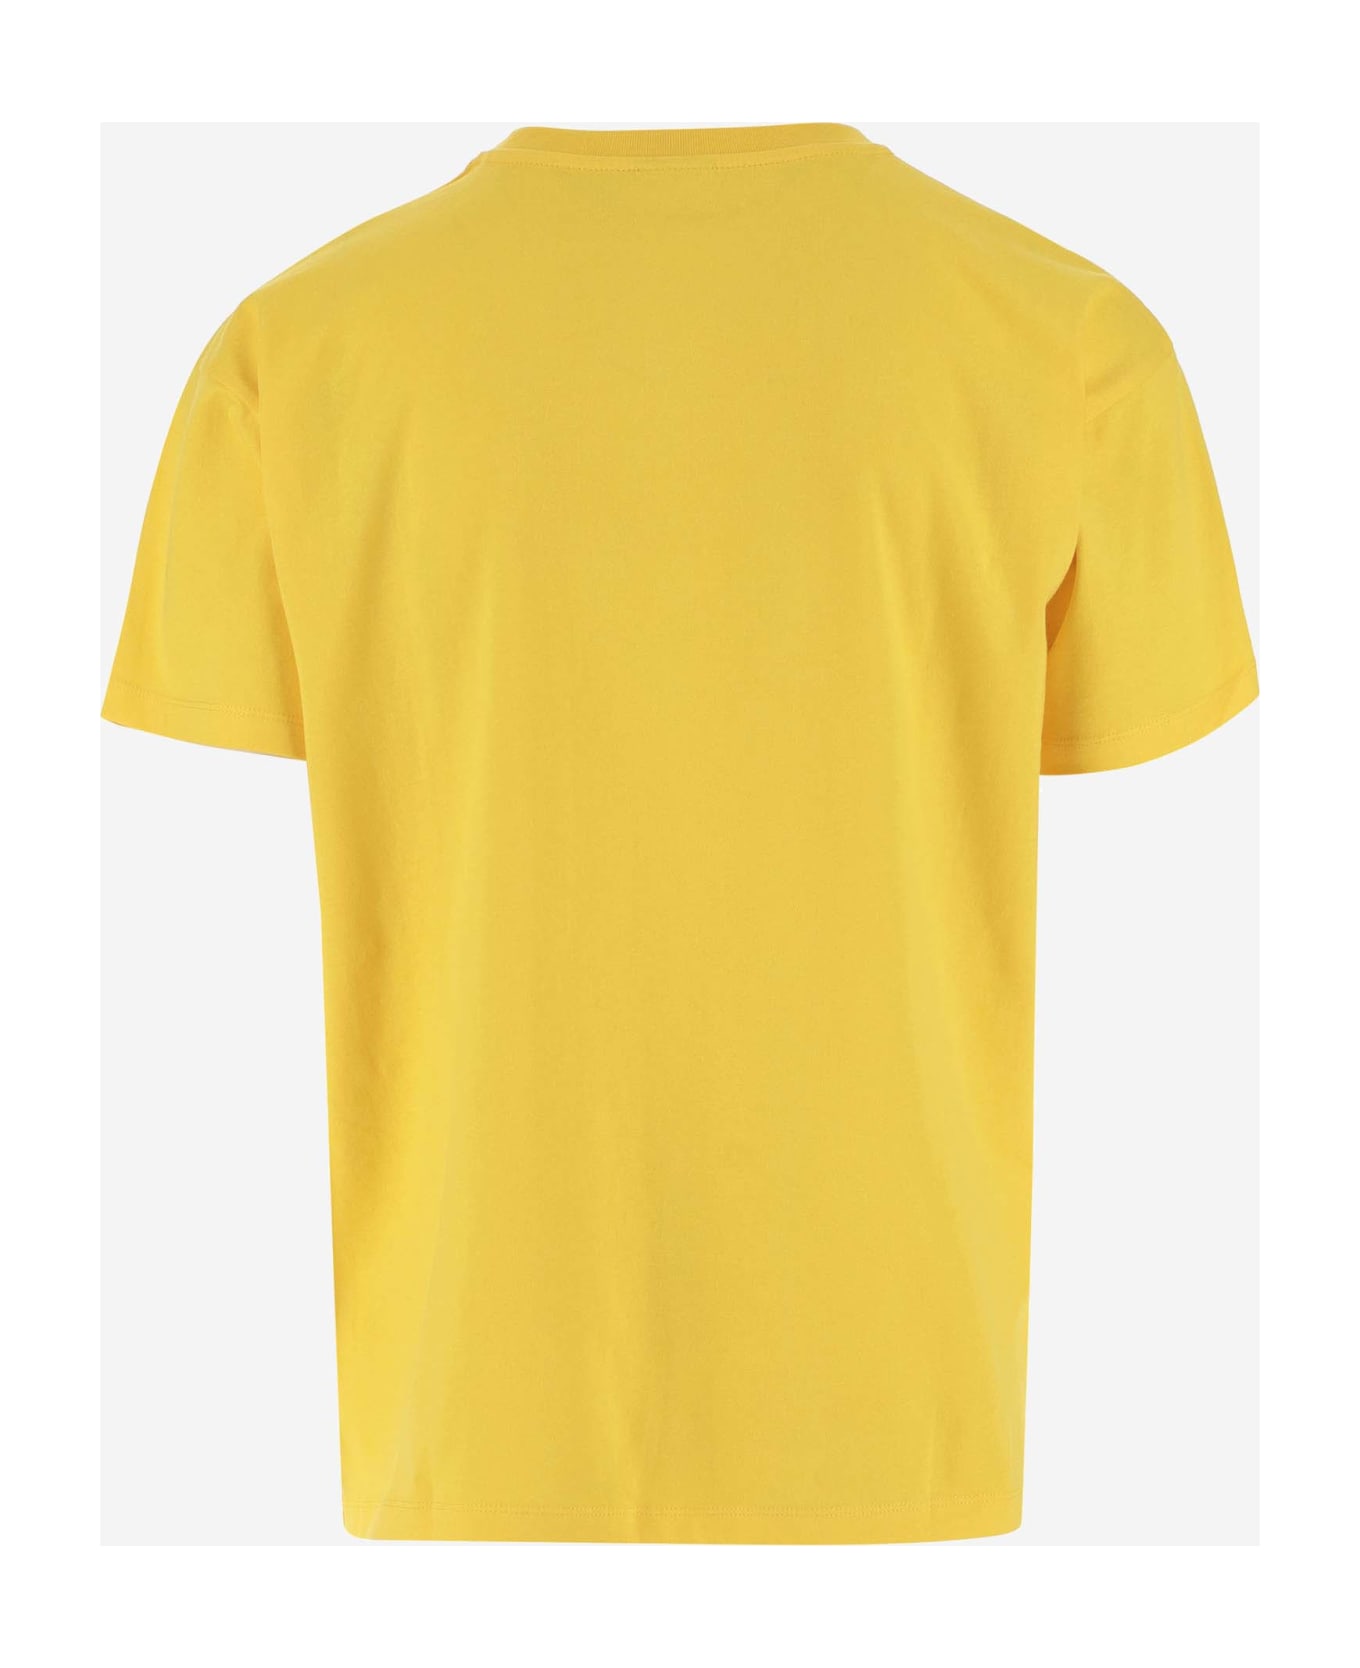 Sky High Farm Cotton T-shirt With Logo - Yellow シャツ